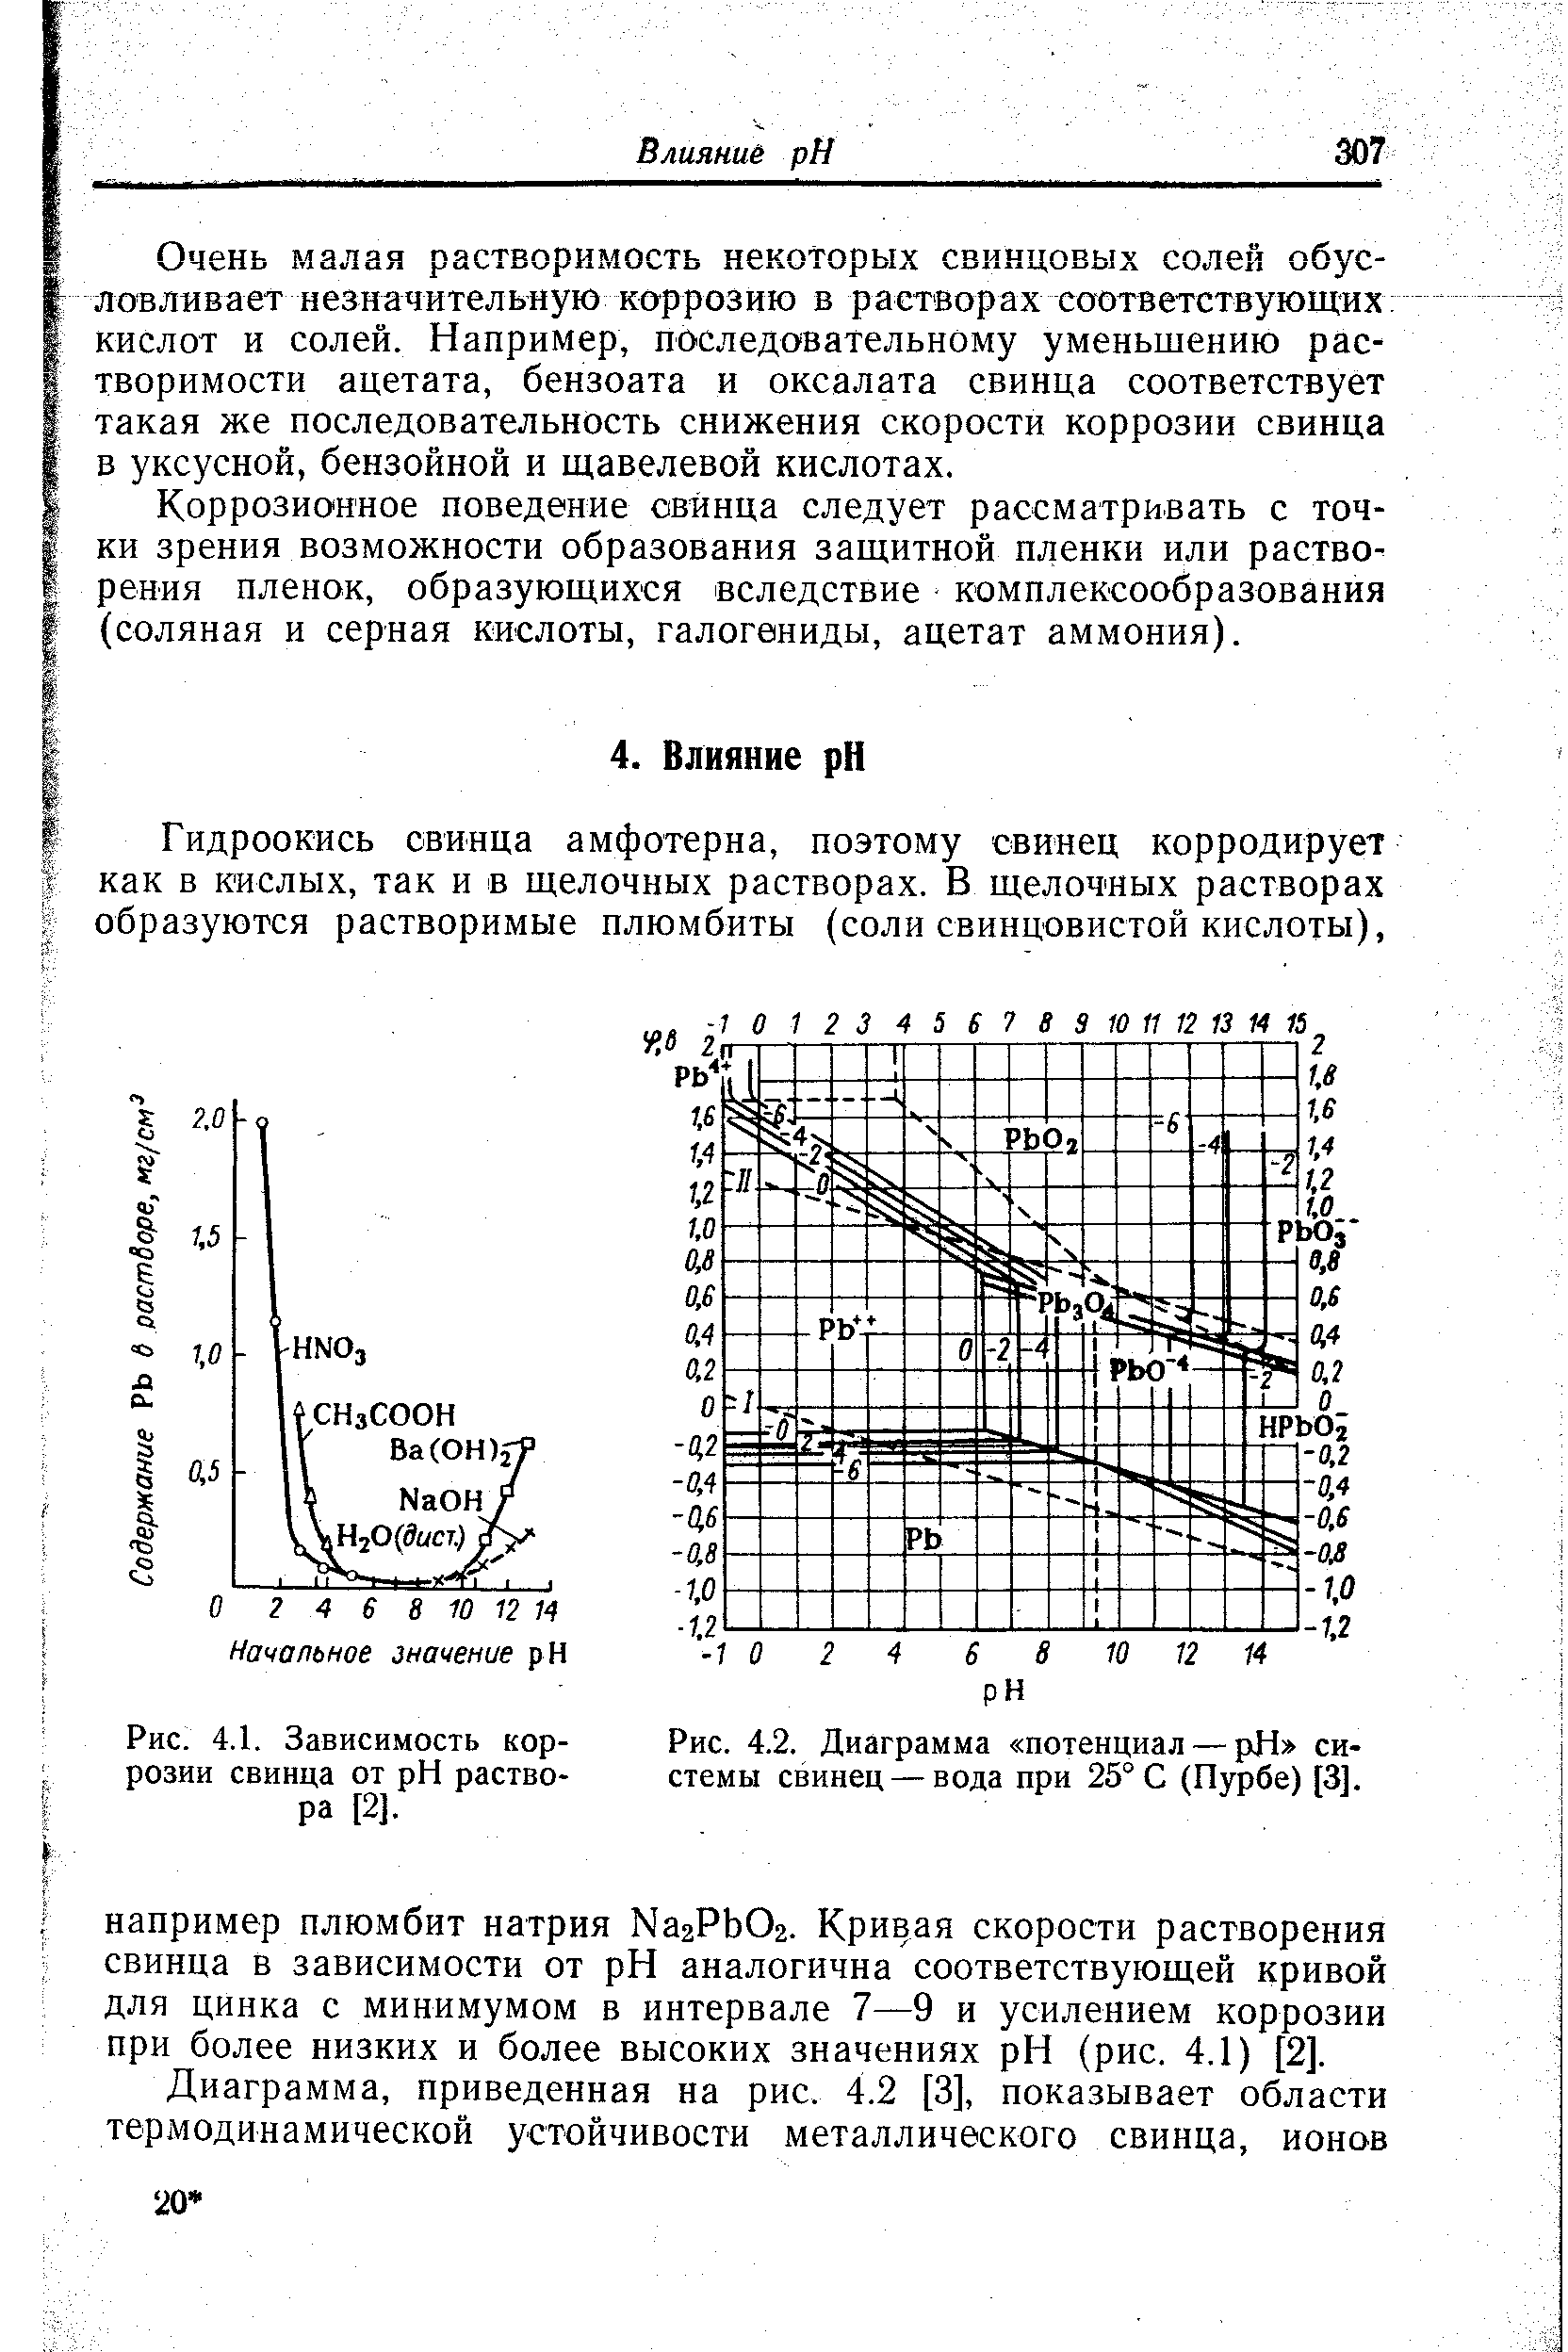 Рис. 4.2. Диаграмма потенциал — рЛ системы свинец — вода при 25° С (Пурбе) [3].
